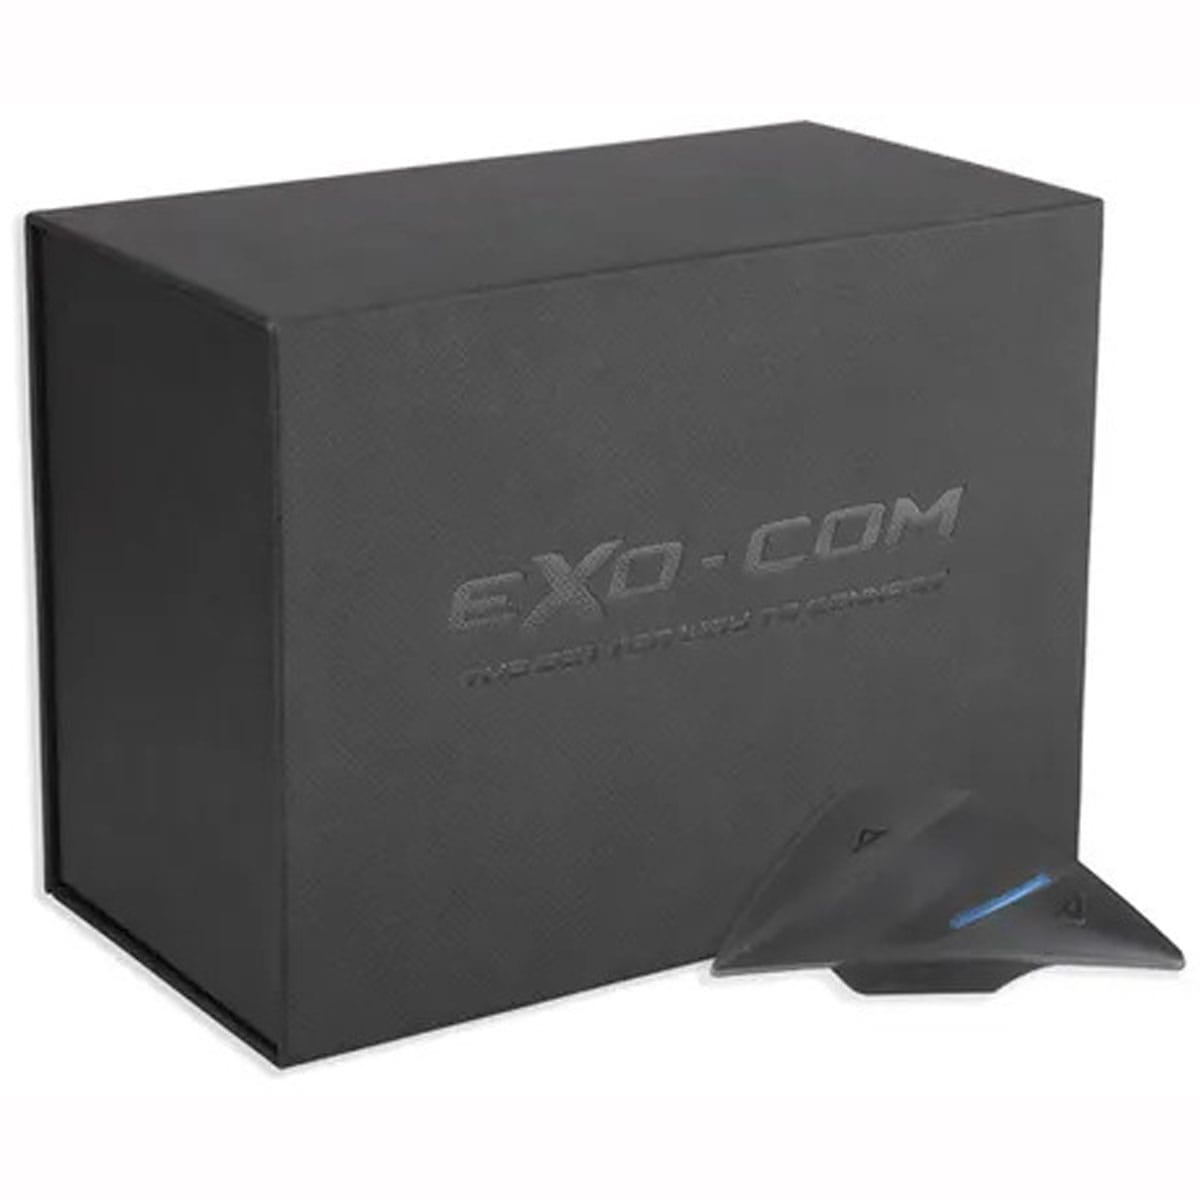 Scorpion Exo-Com Bluetooth Intercom Headset: An easy to use intercom for groups of up to 4